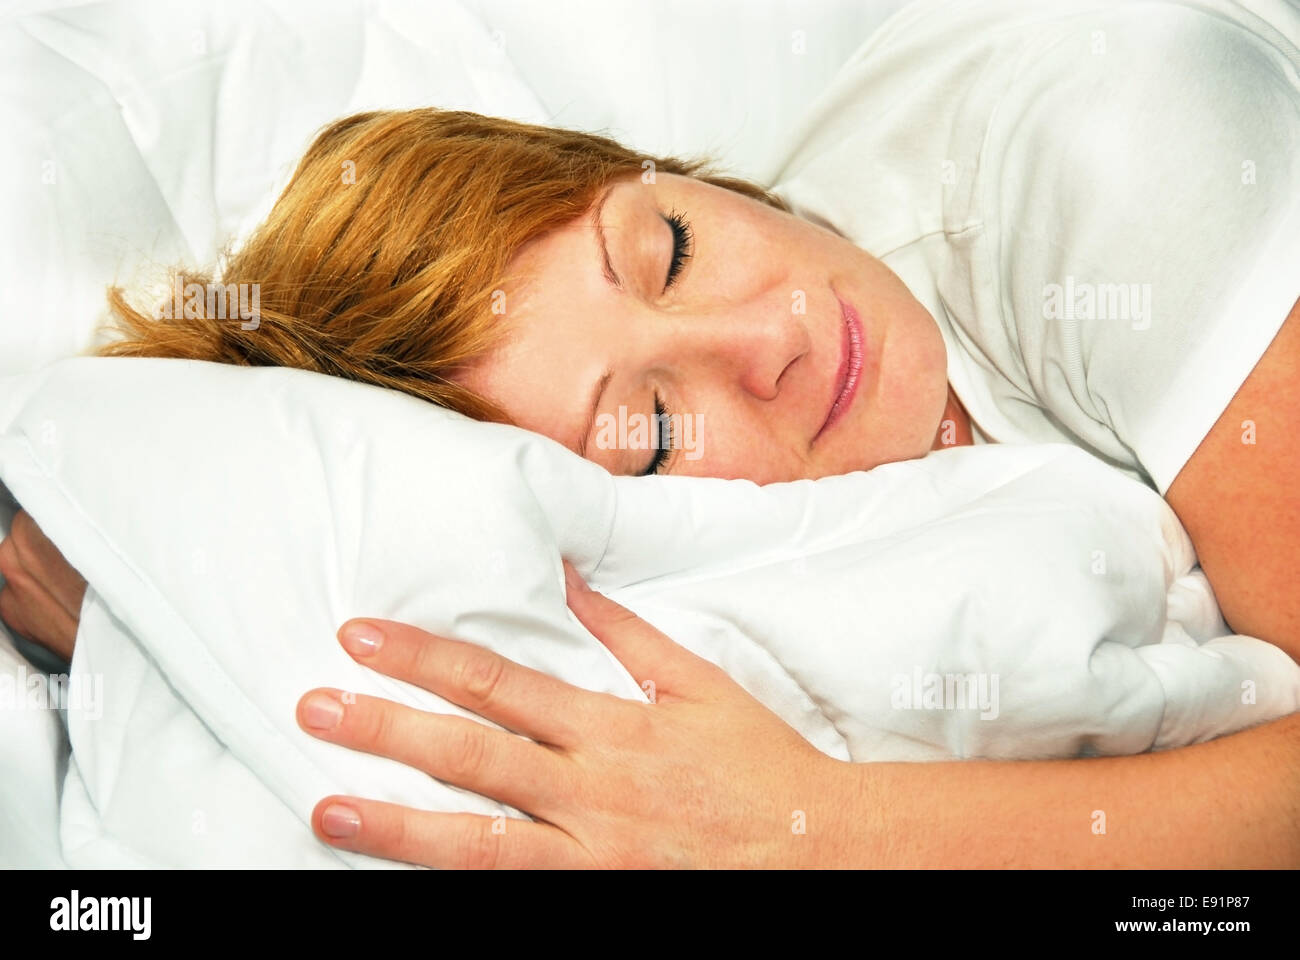 Sleeping woman portrait Stock Photo